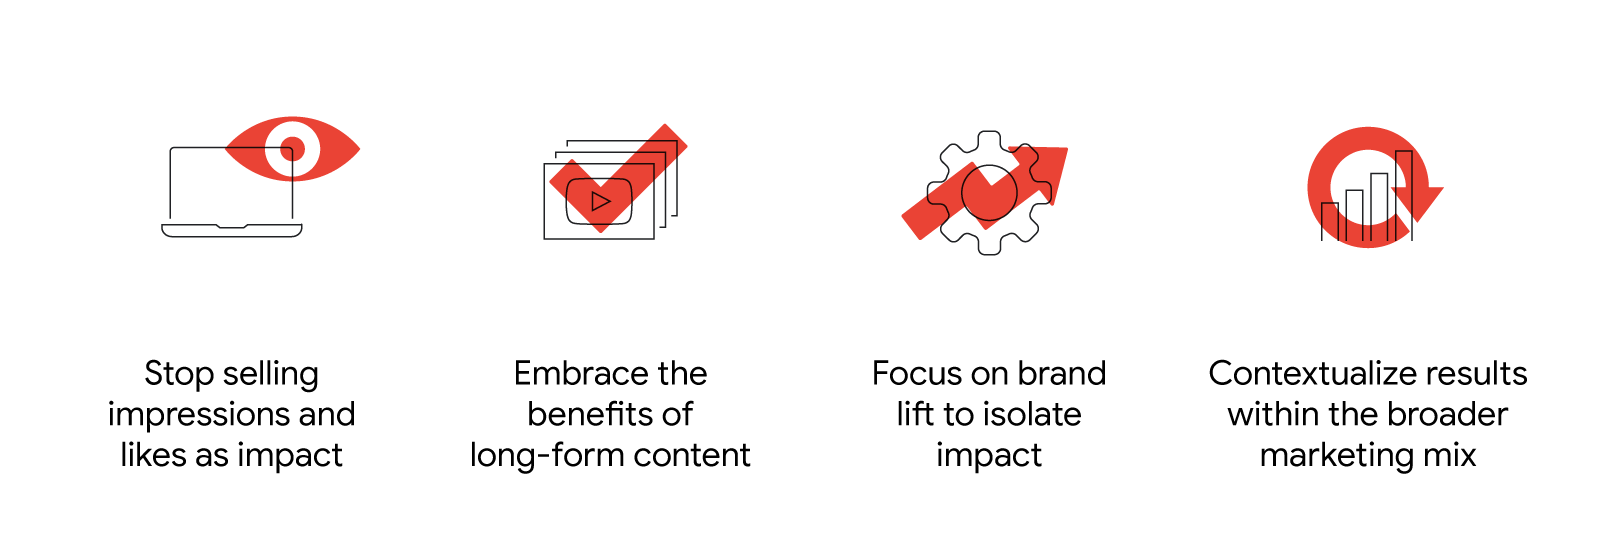 Influencer Marketing Effectiveness & Benefits - Wobb Blog